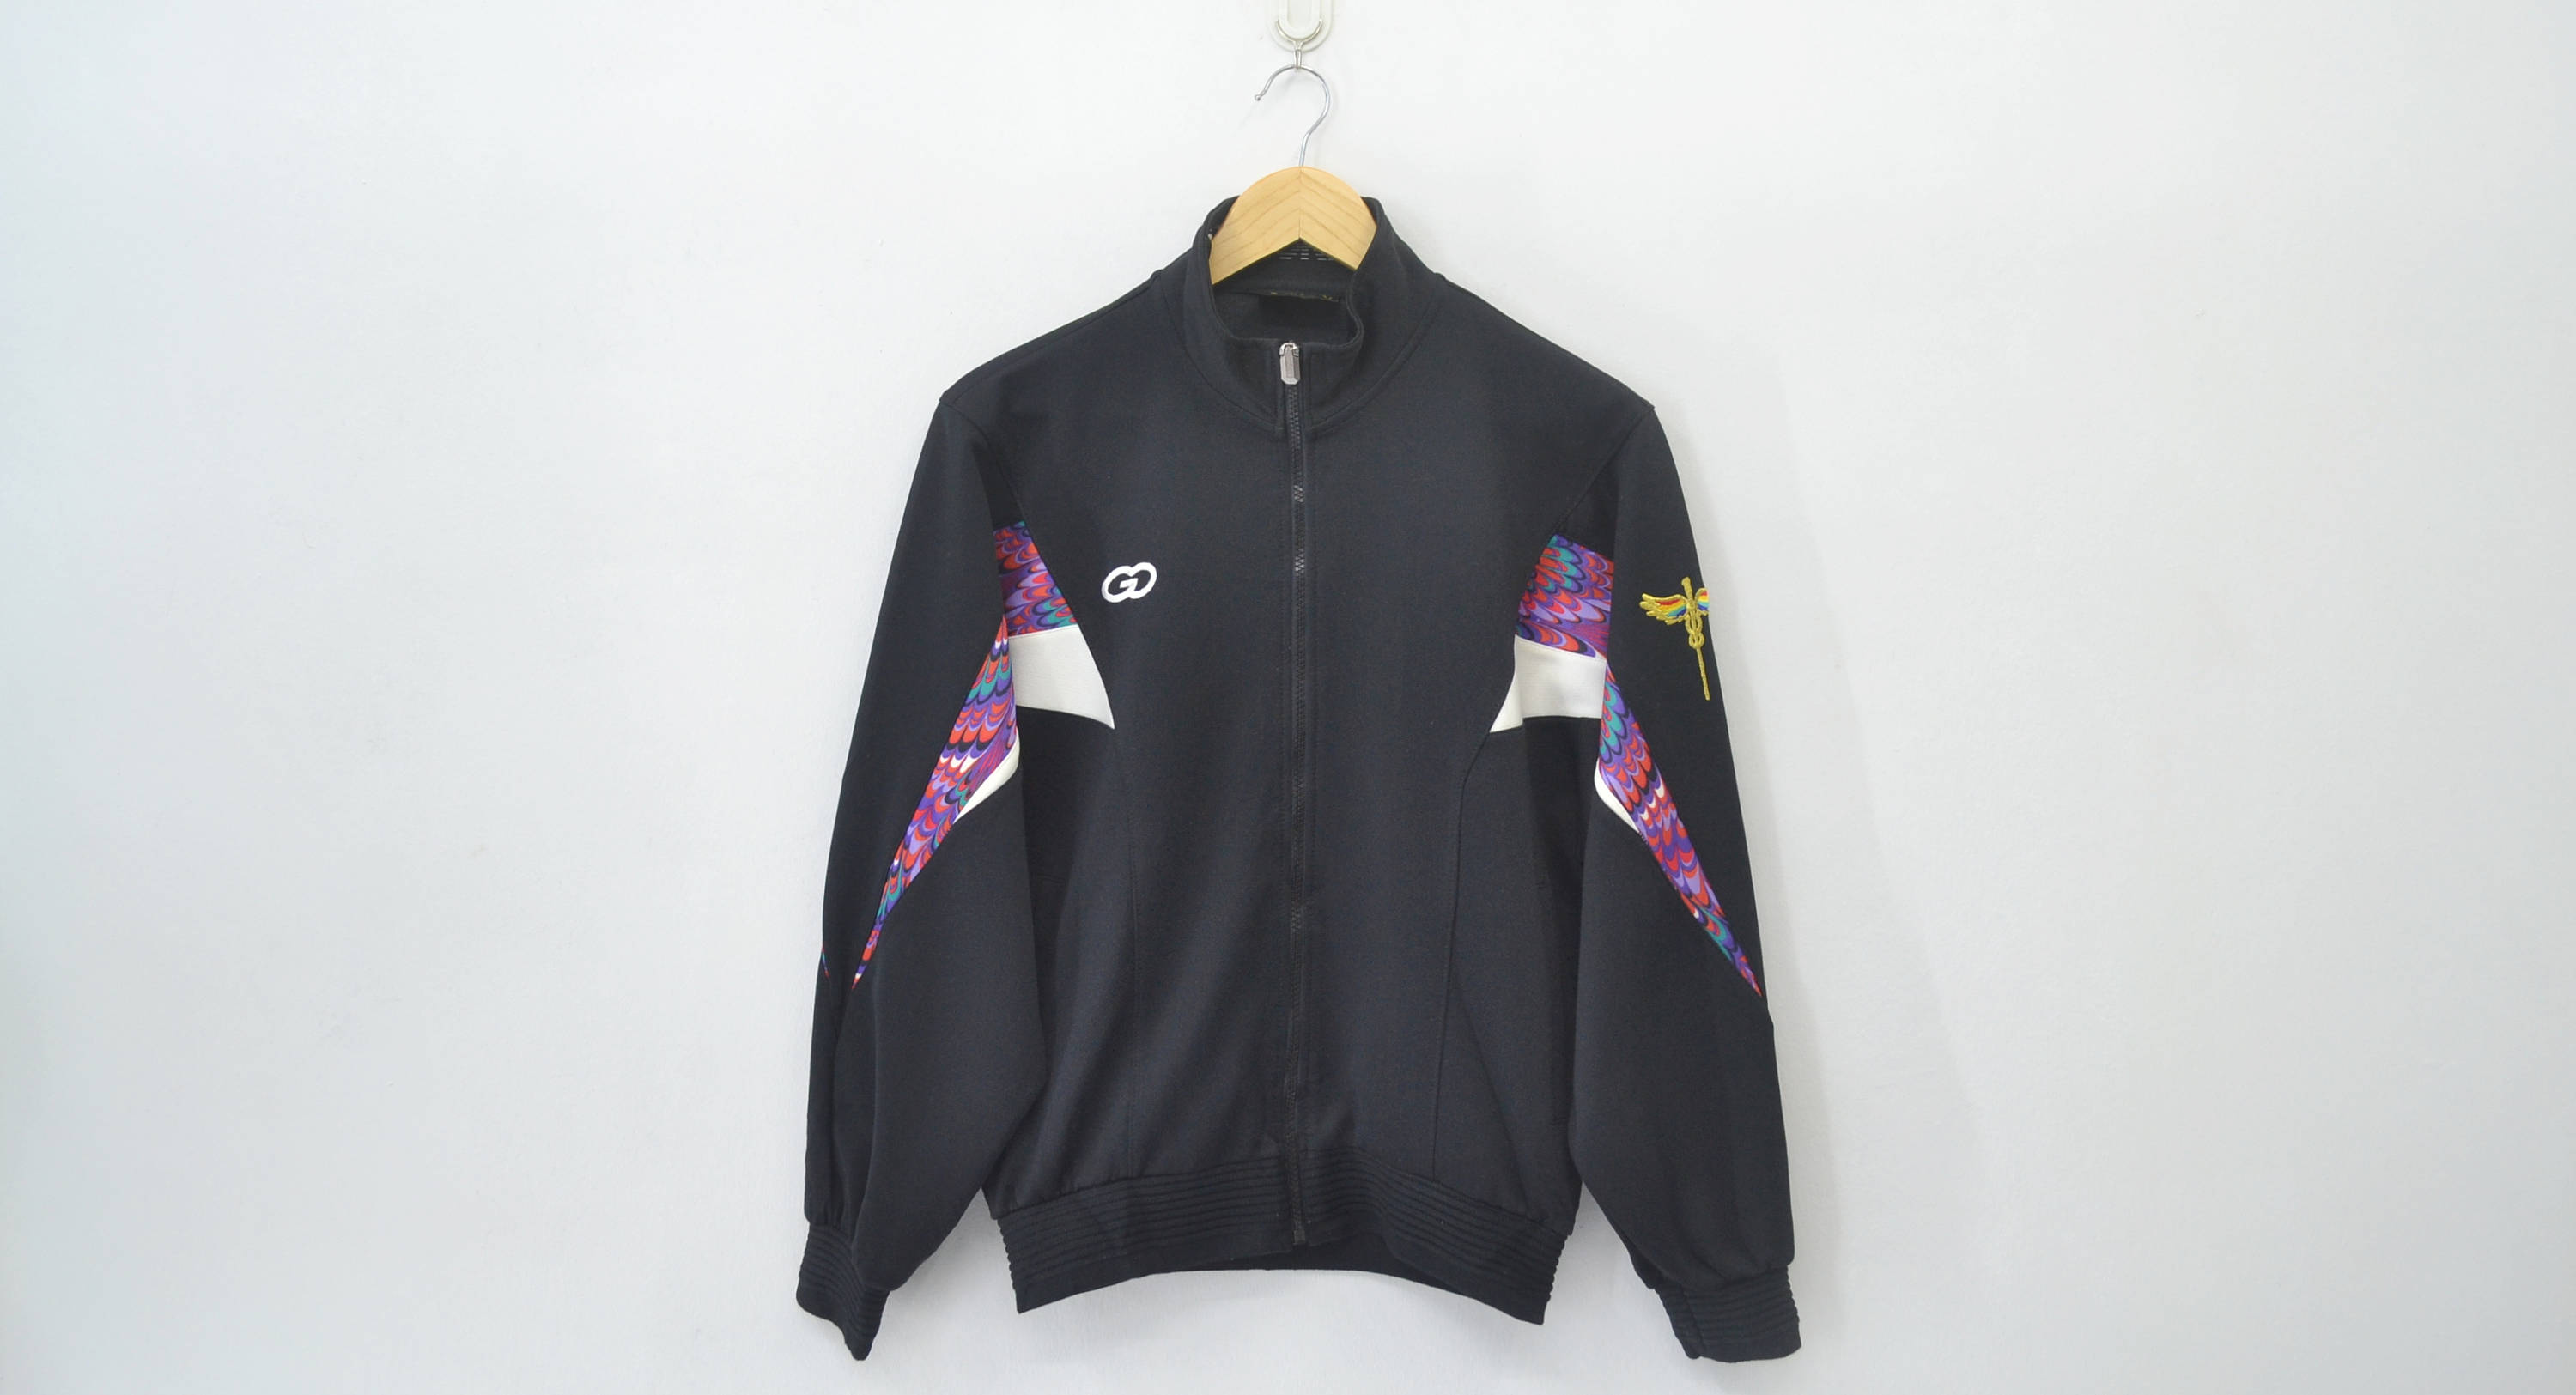 Asics Jacket Vintage Gona By Asics Track Jacket 90s Gona By | Etsy